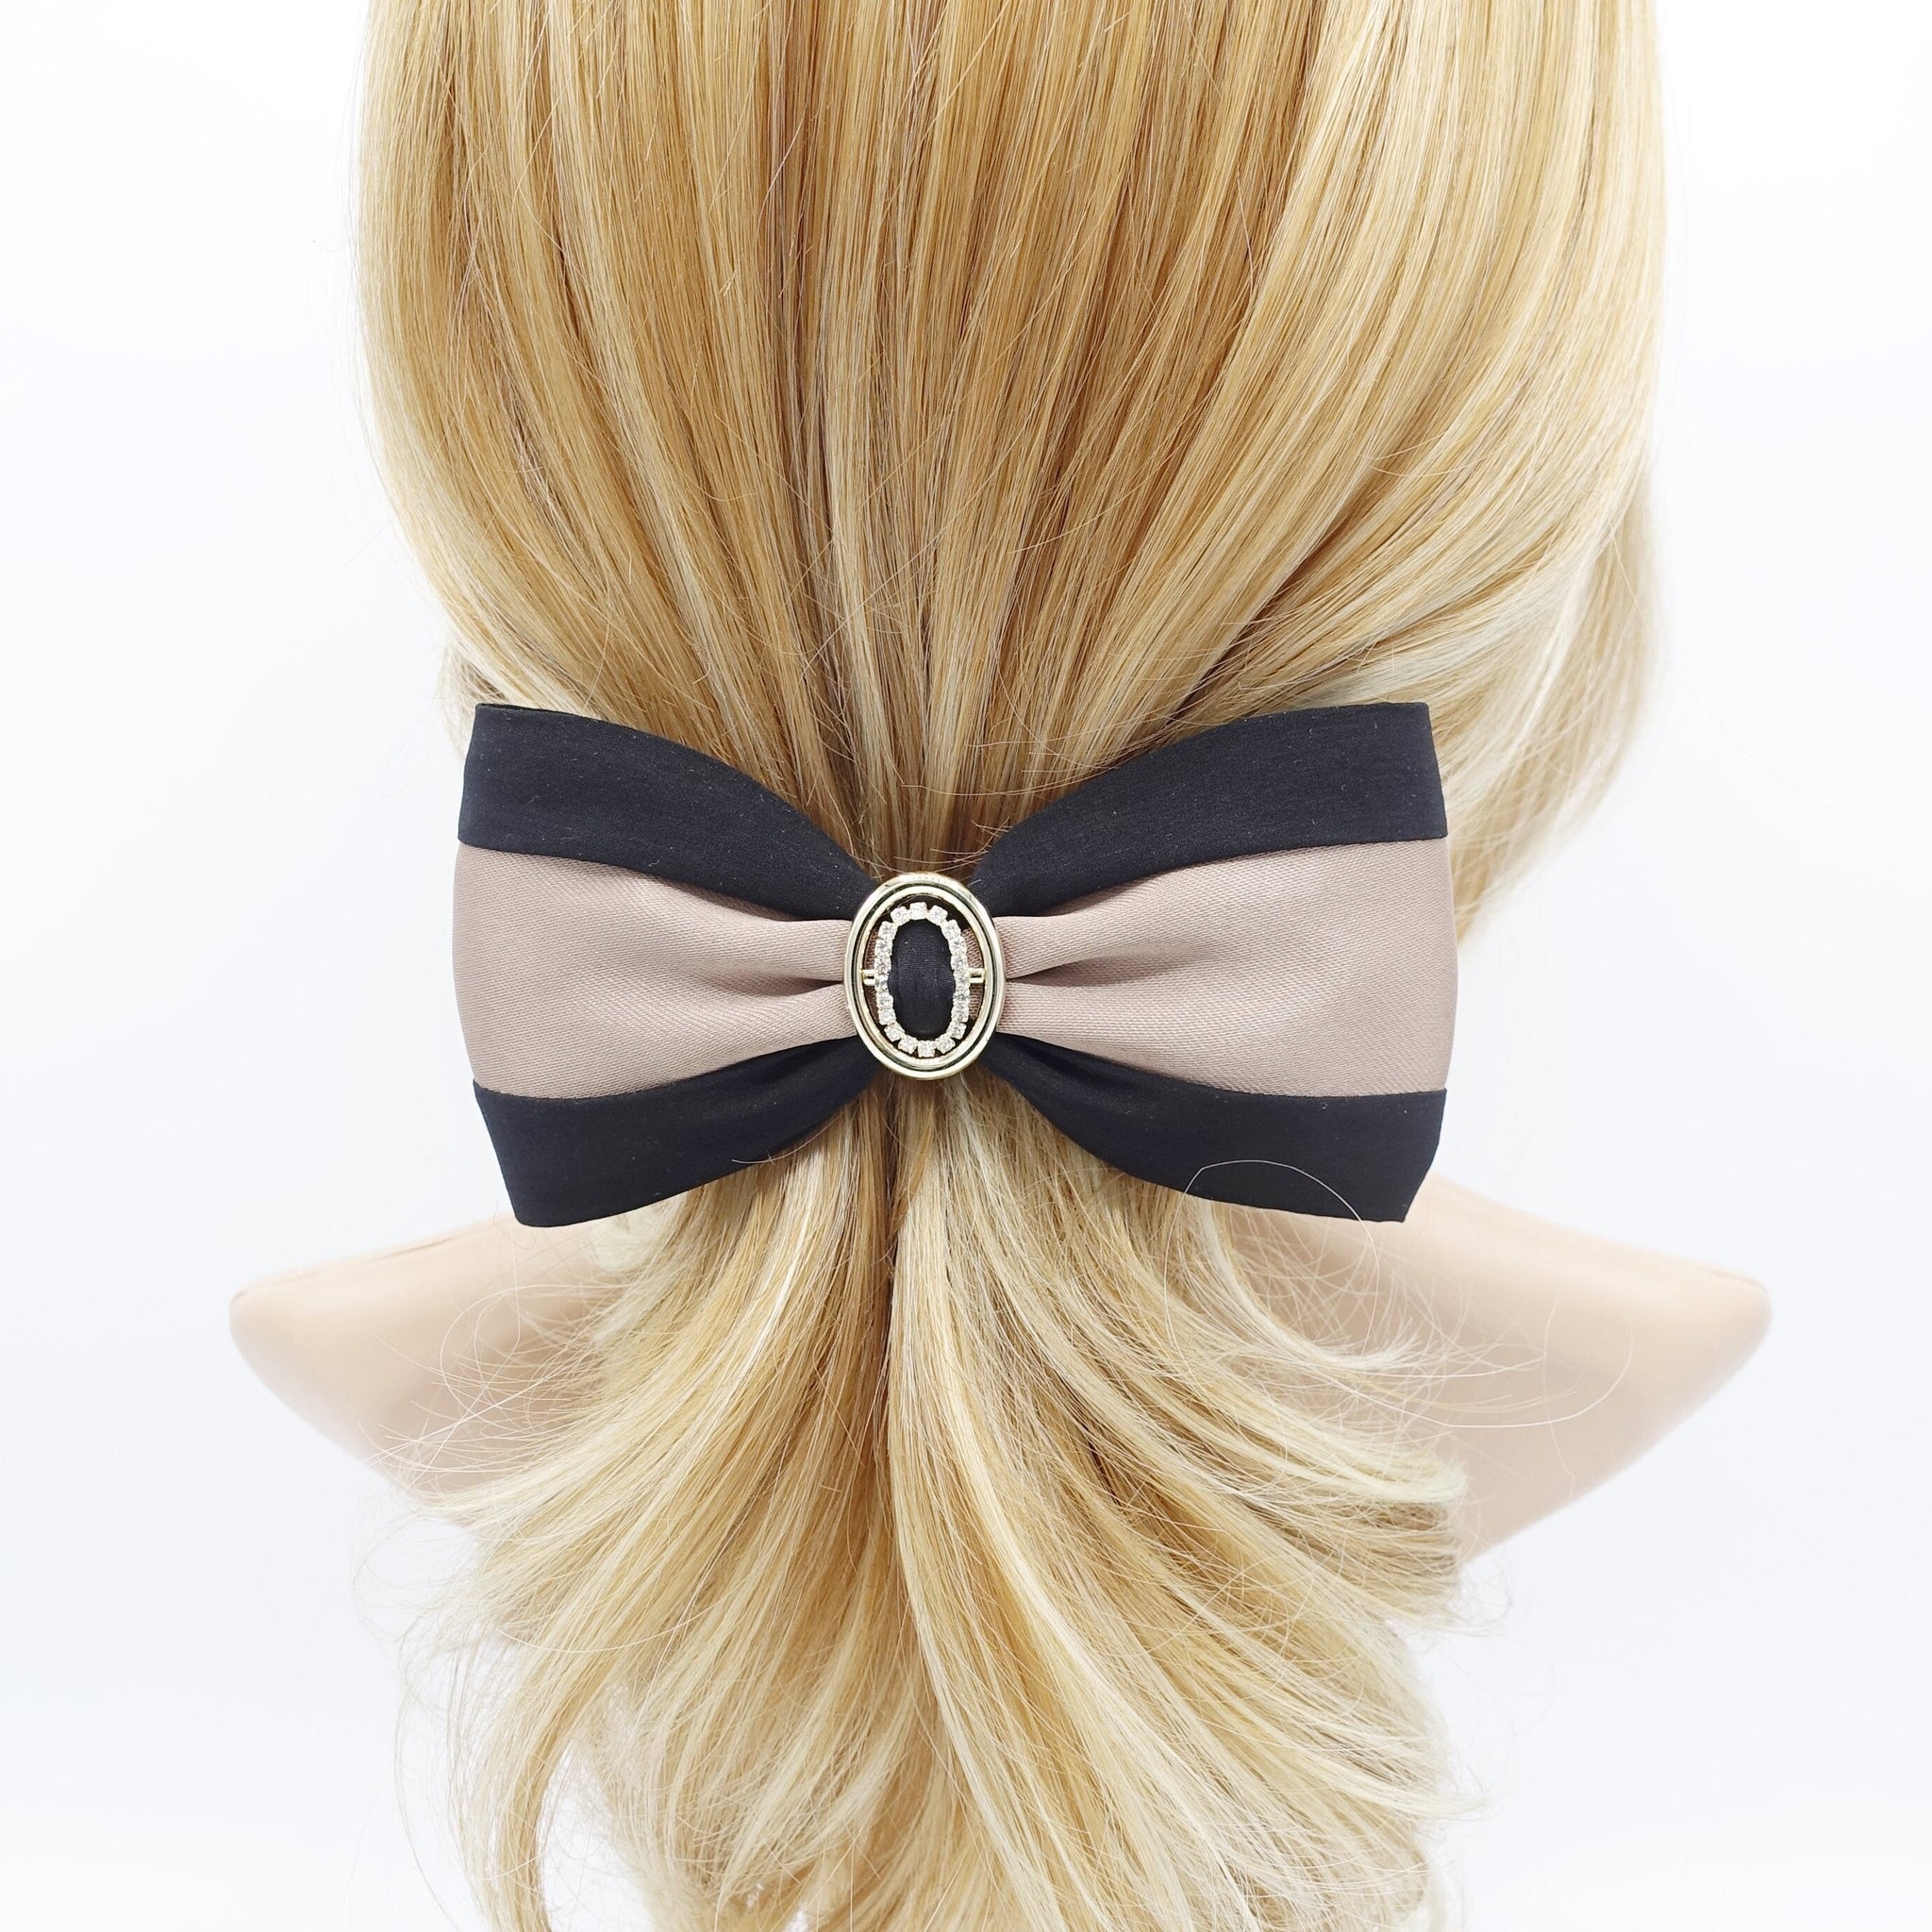 veryshine.com Barrette (Bow) Beige two tone satin hair bow rhinestone gold buckle embellished bow barrette